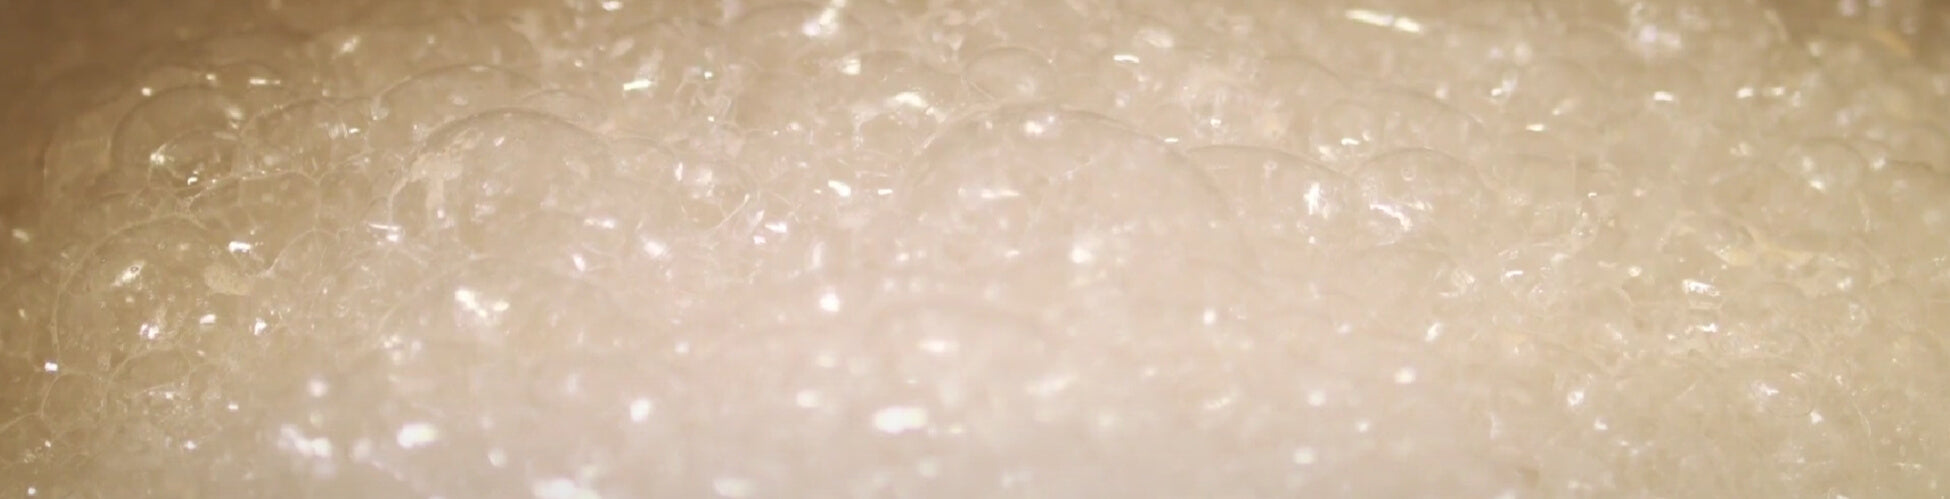 bubbles from fermentation